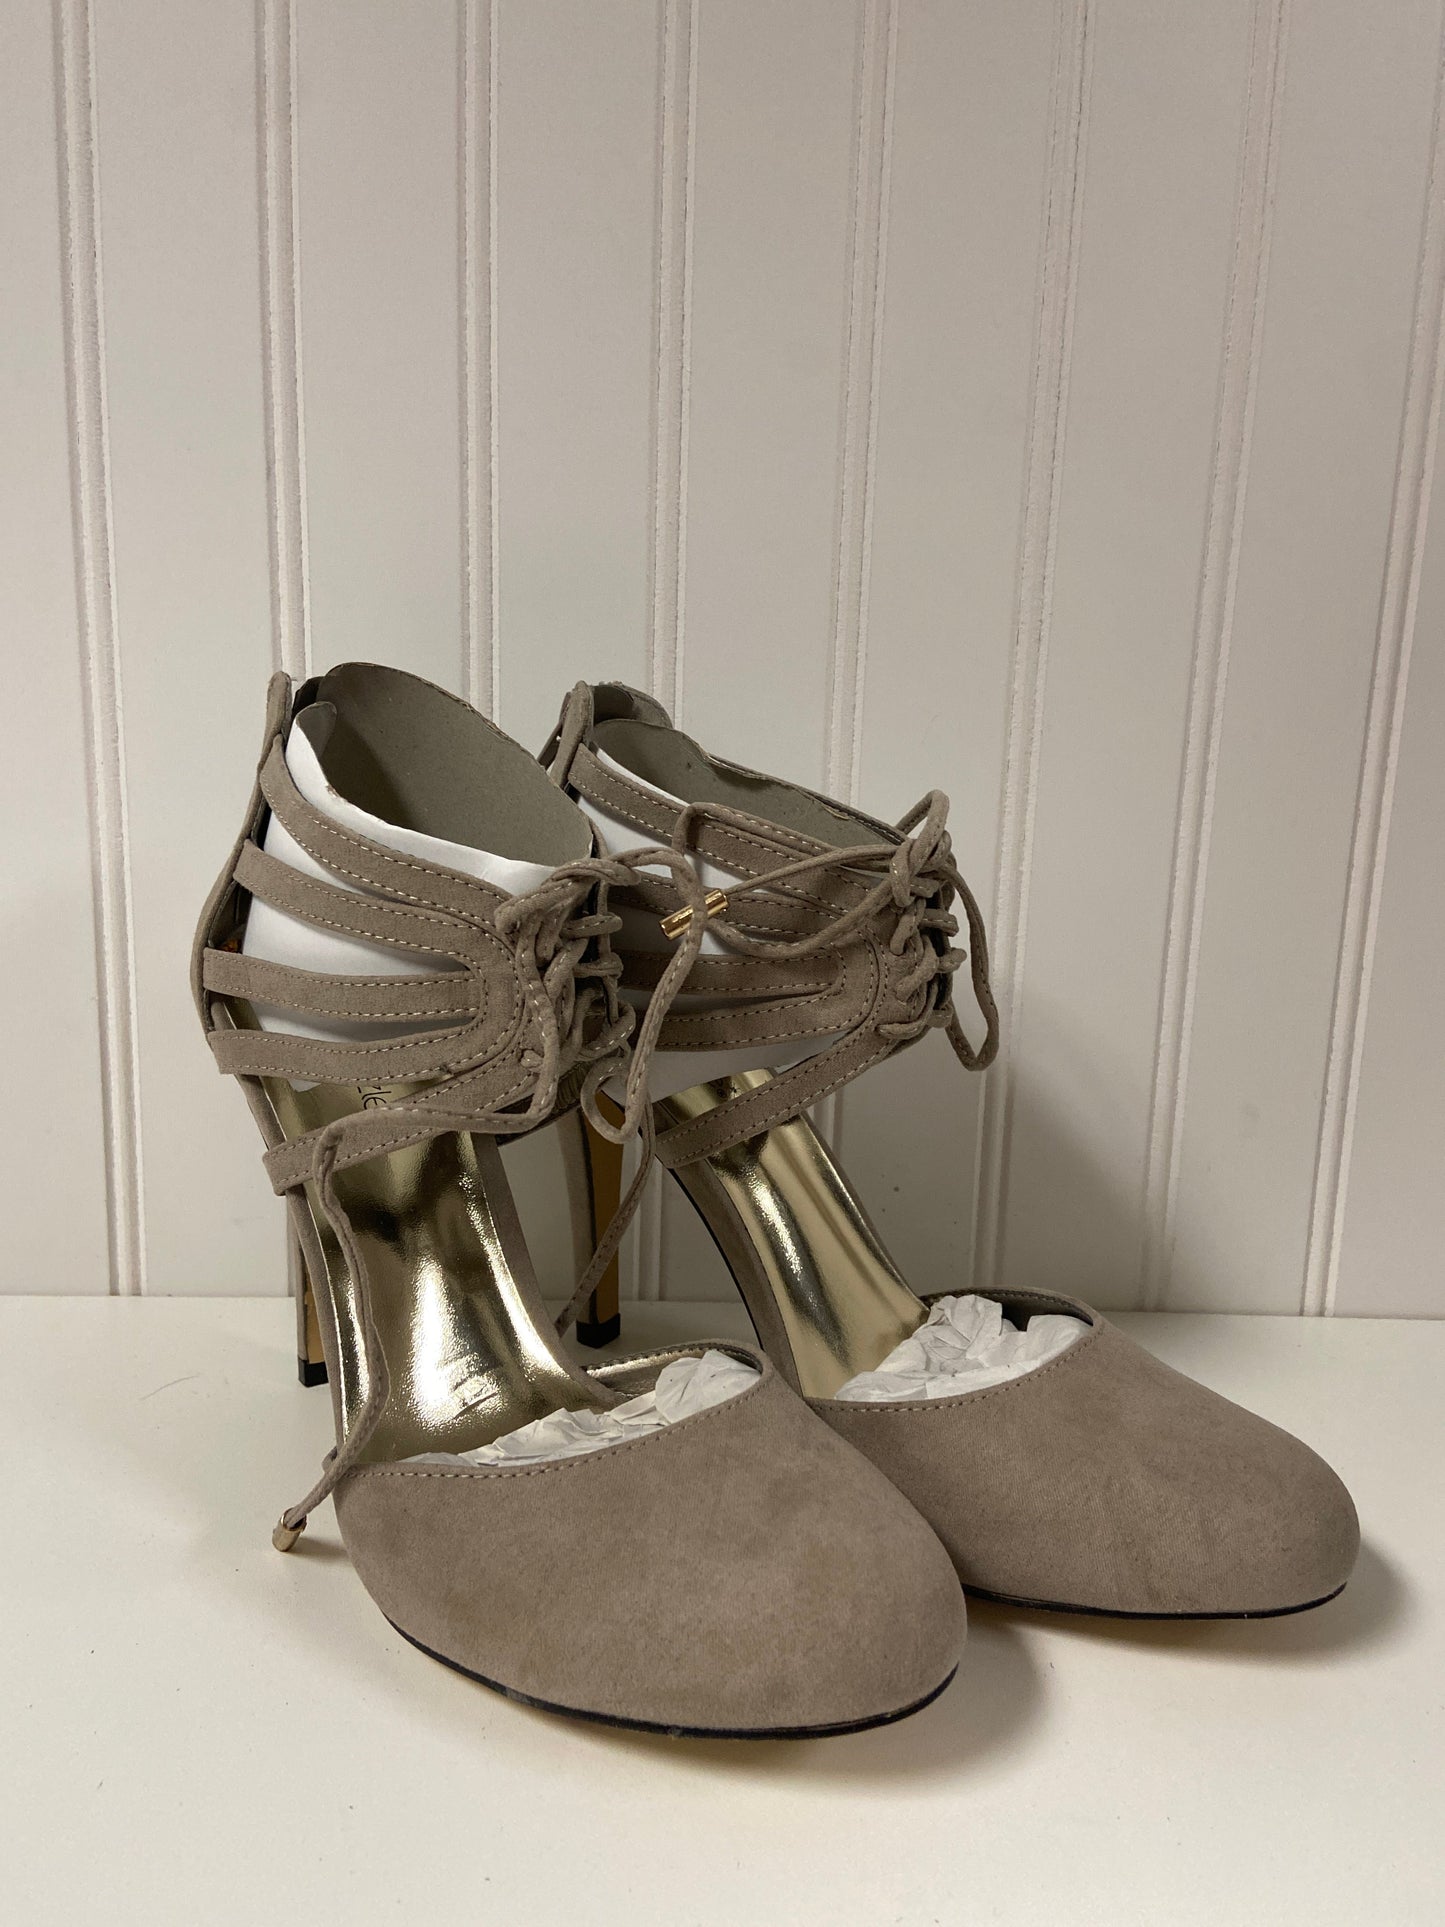 Taupe Shoes Heels Stiletto Shoedazzle, Size 9